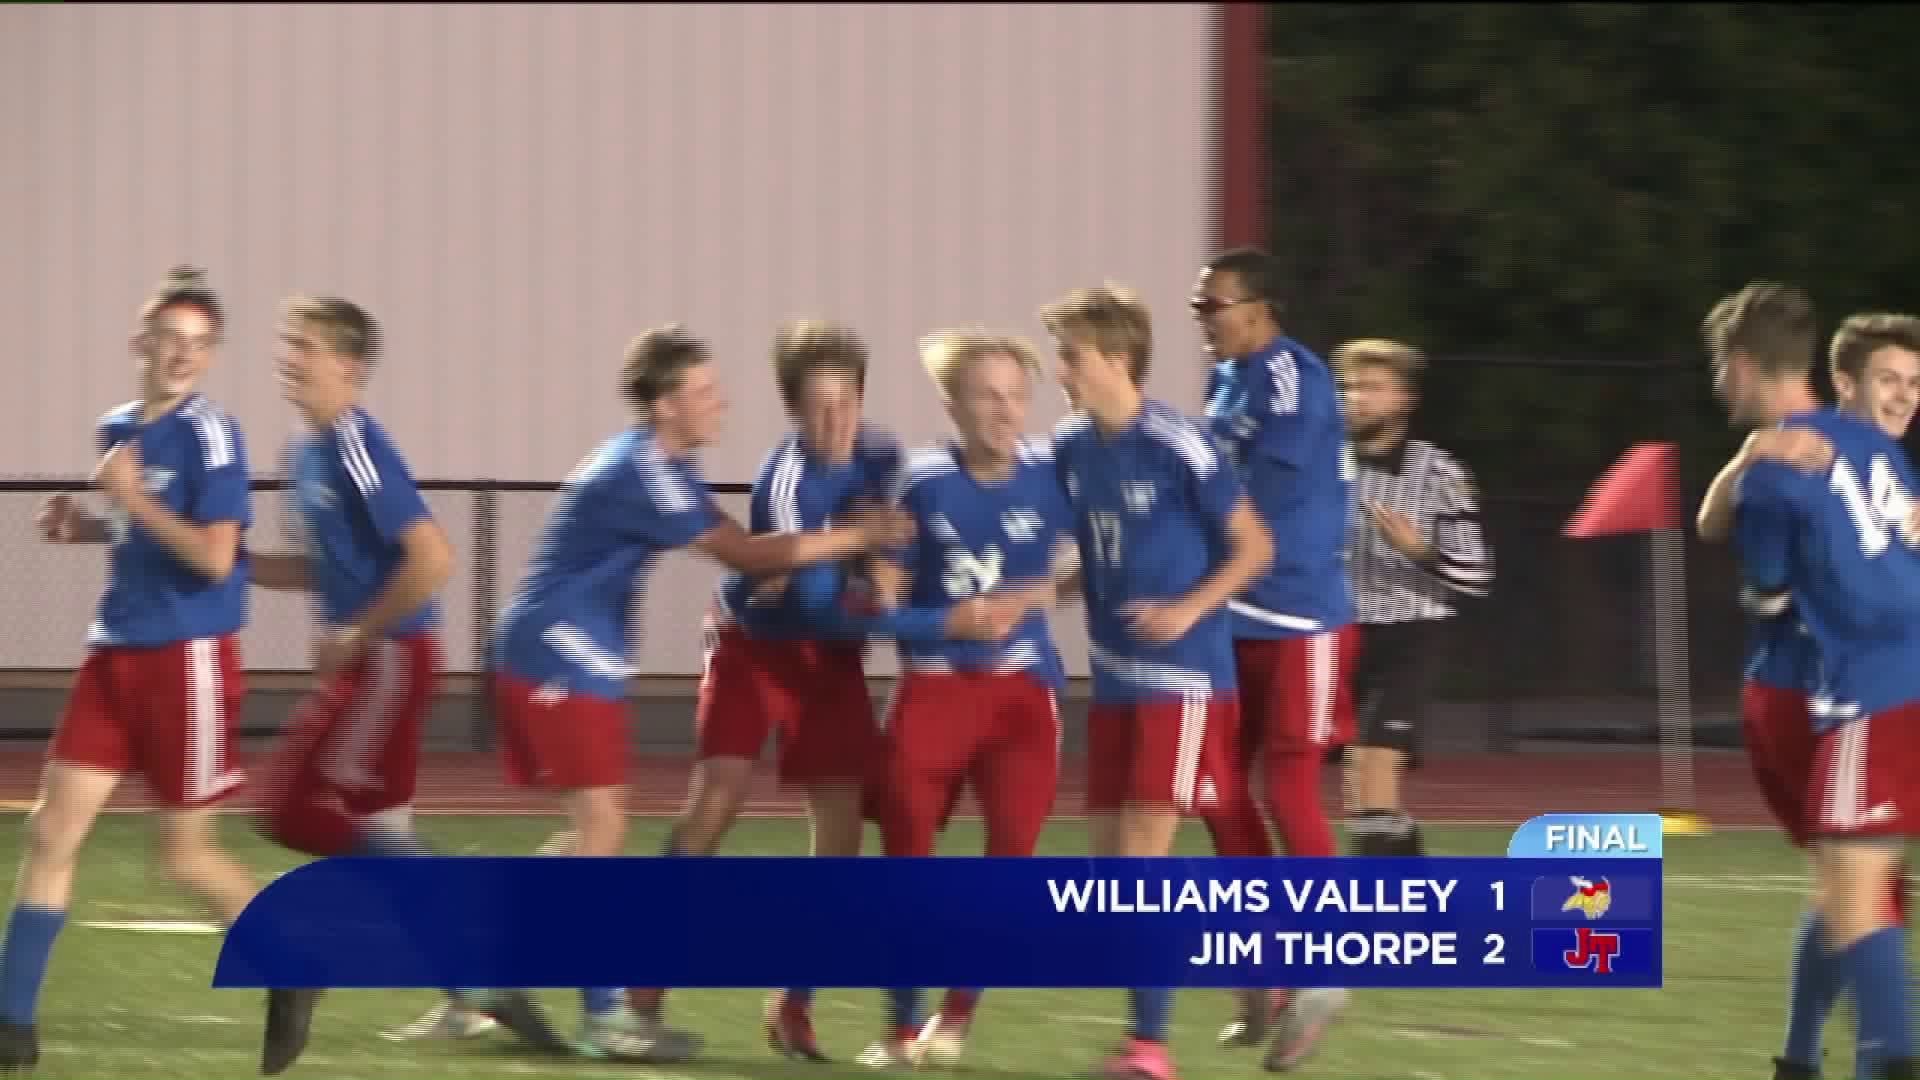 Williams Valley vs Jim Thorpe boys soccer